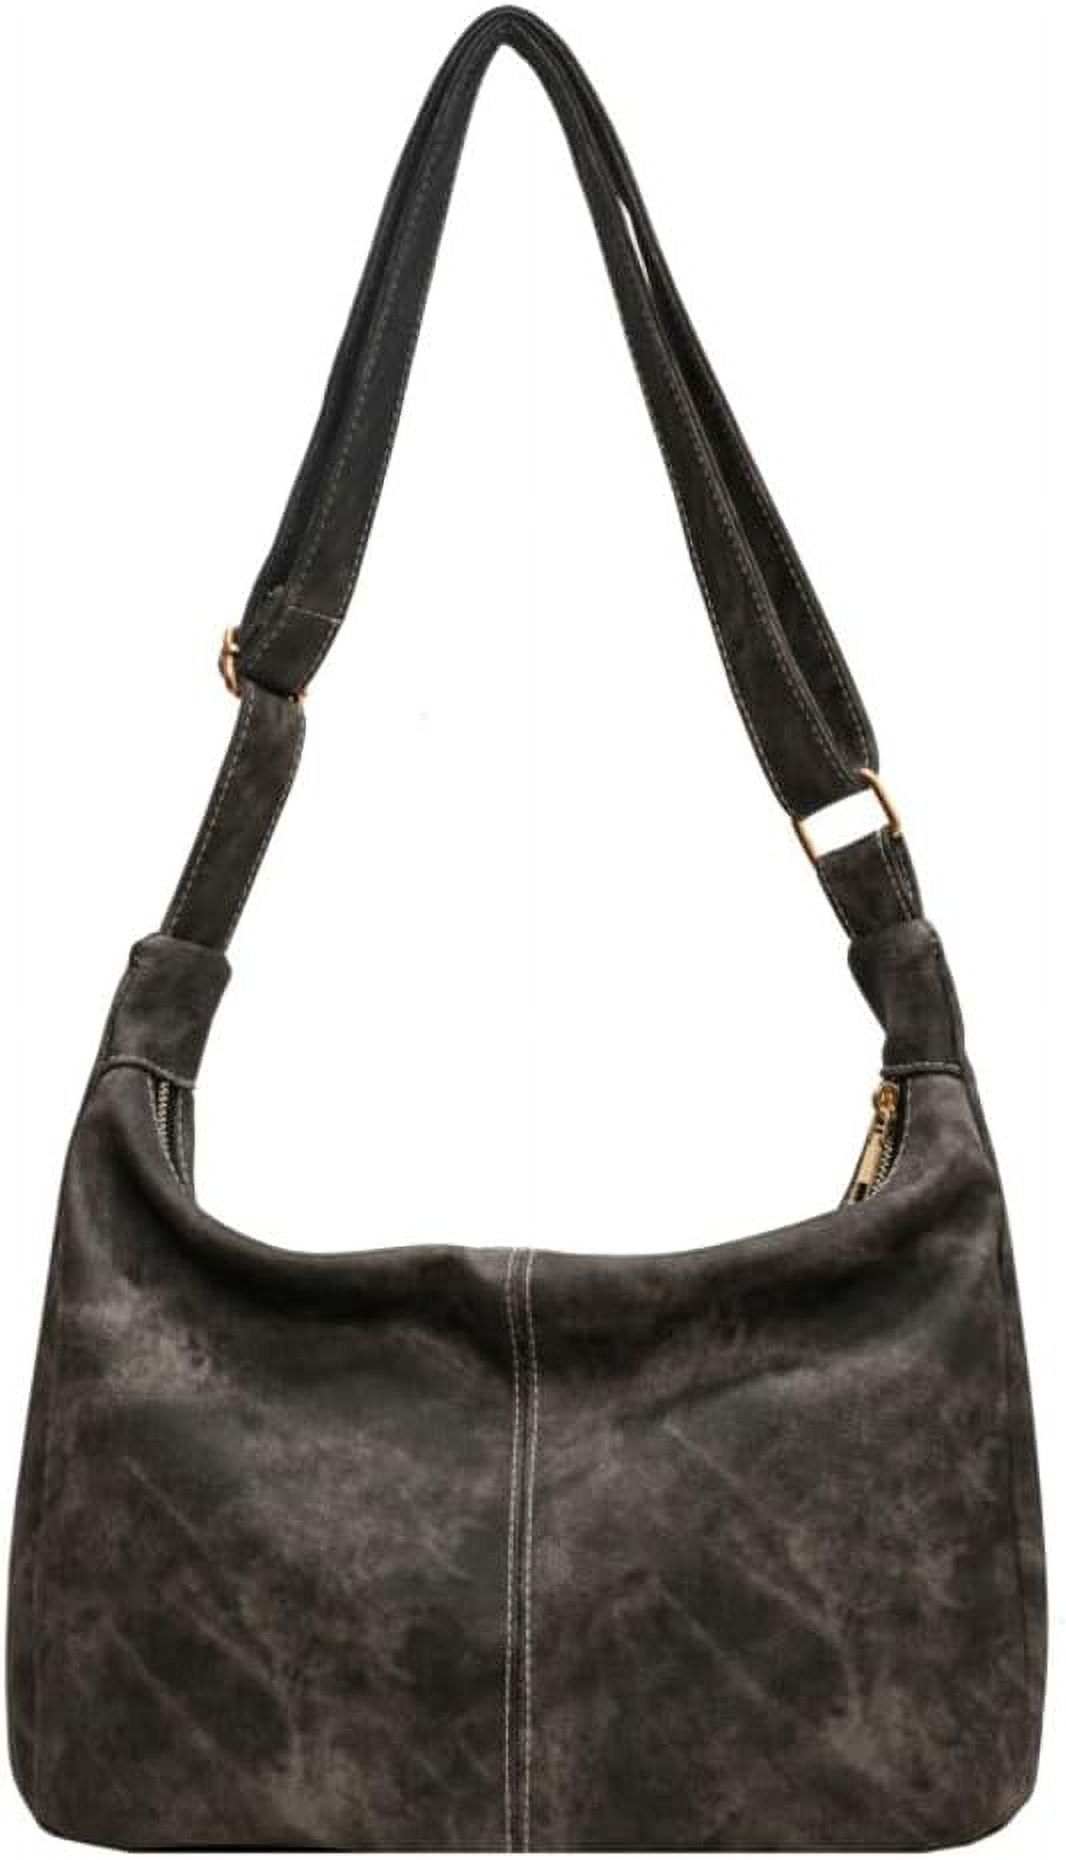 JLMMEN Chic Shoulder Bag Women Vegan Leather Crossbody Bags Retro ...